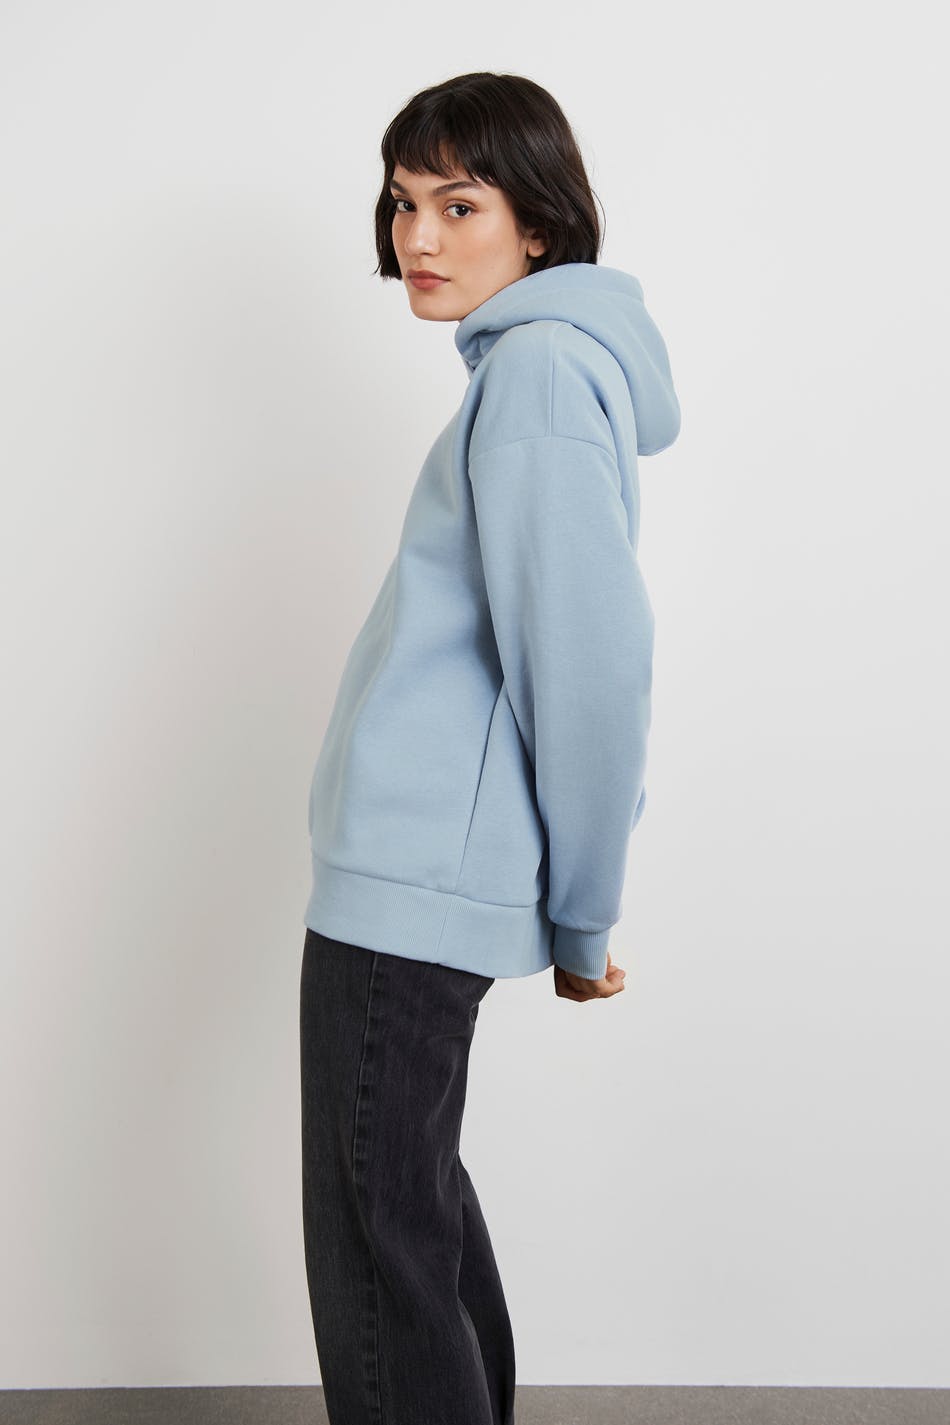 Gina Tricot - Pella hoodie